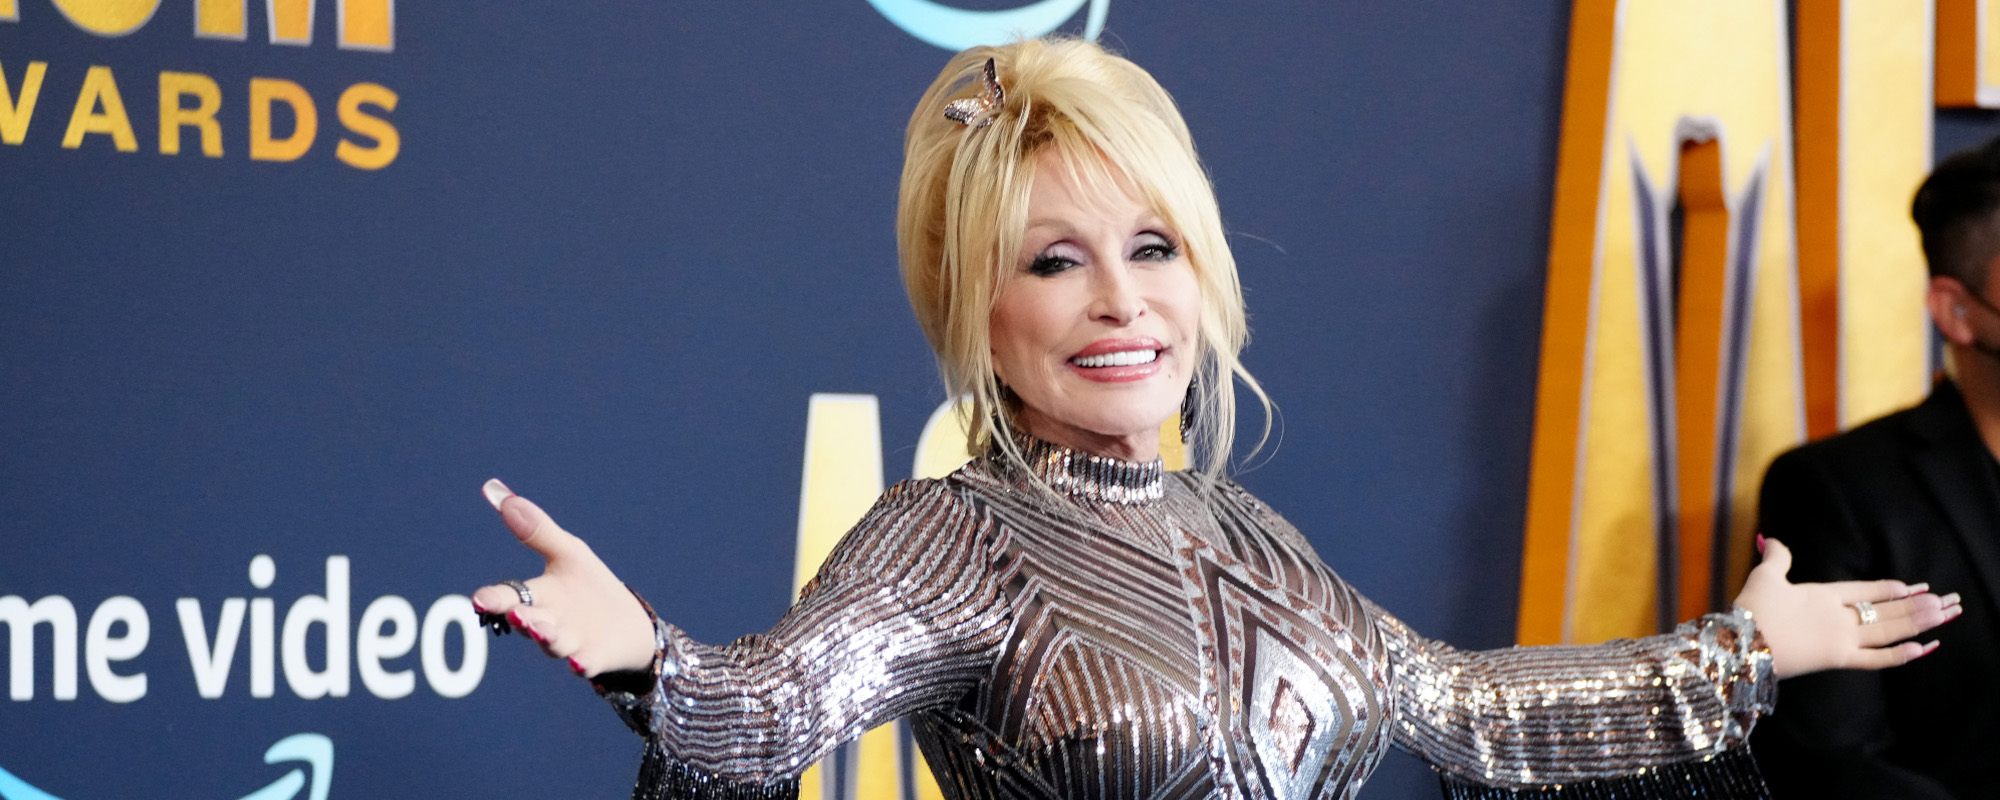 Rock & Roll Hall Of Fame: Dolly Parton Still on Ballot